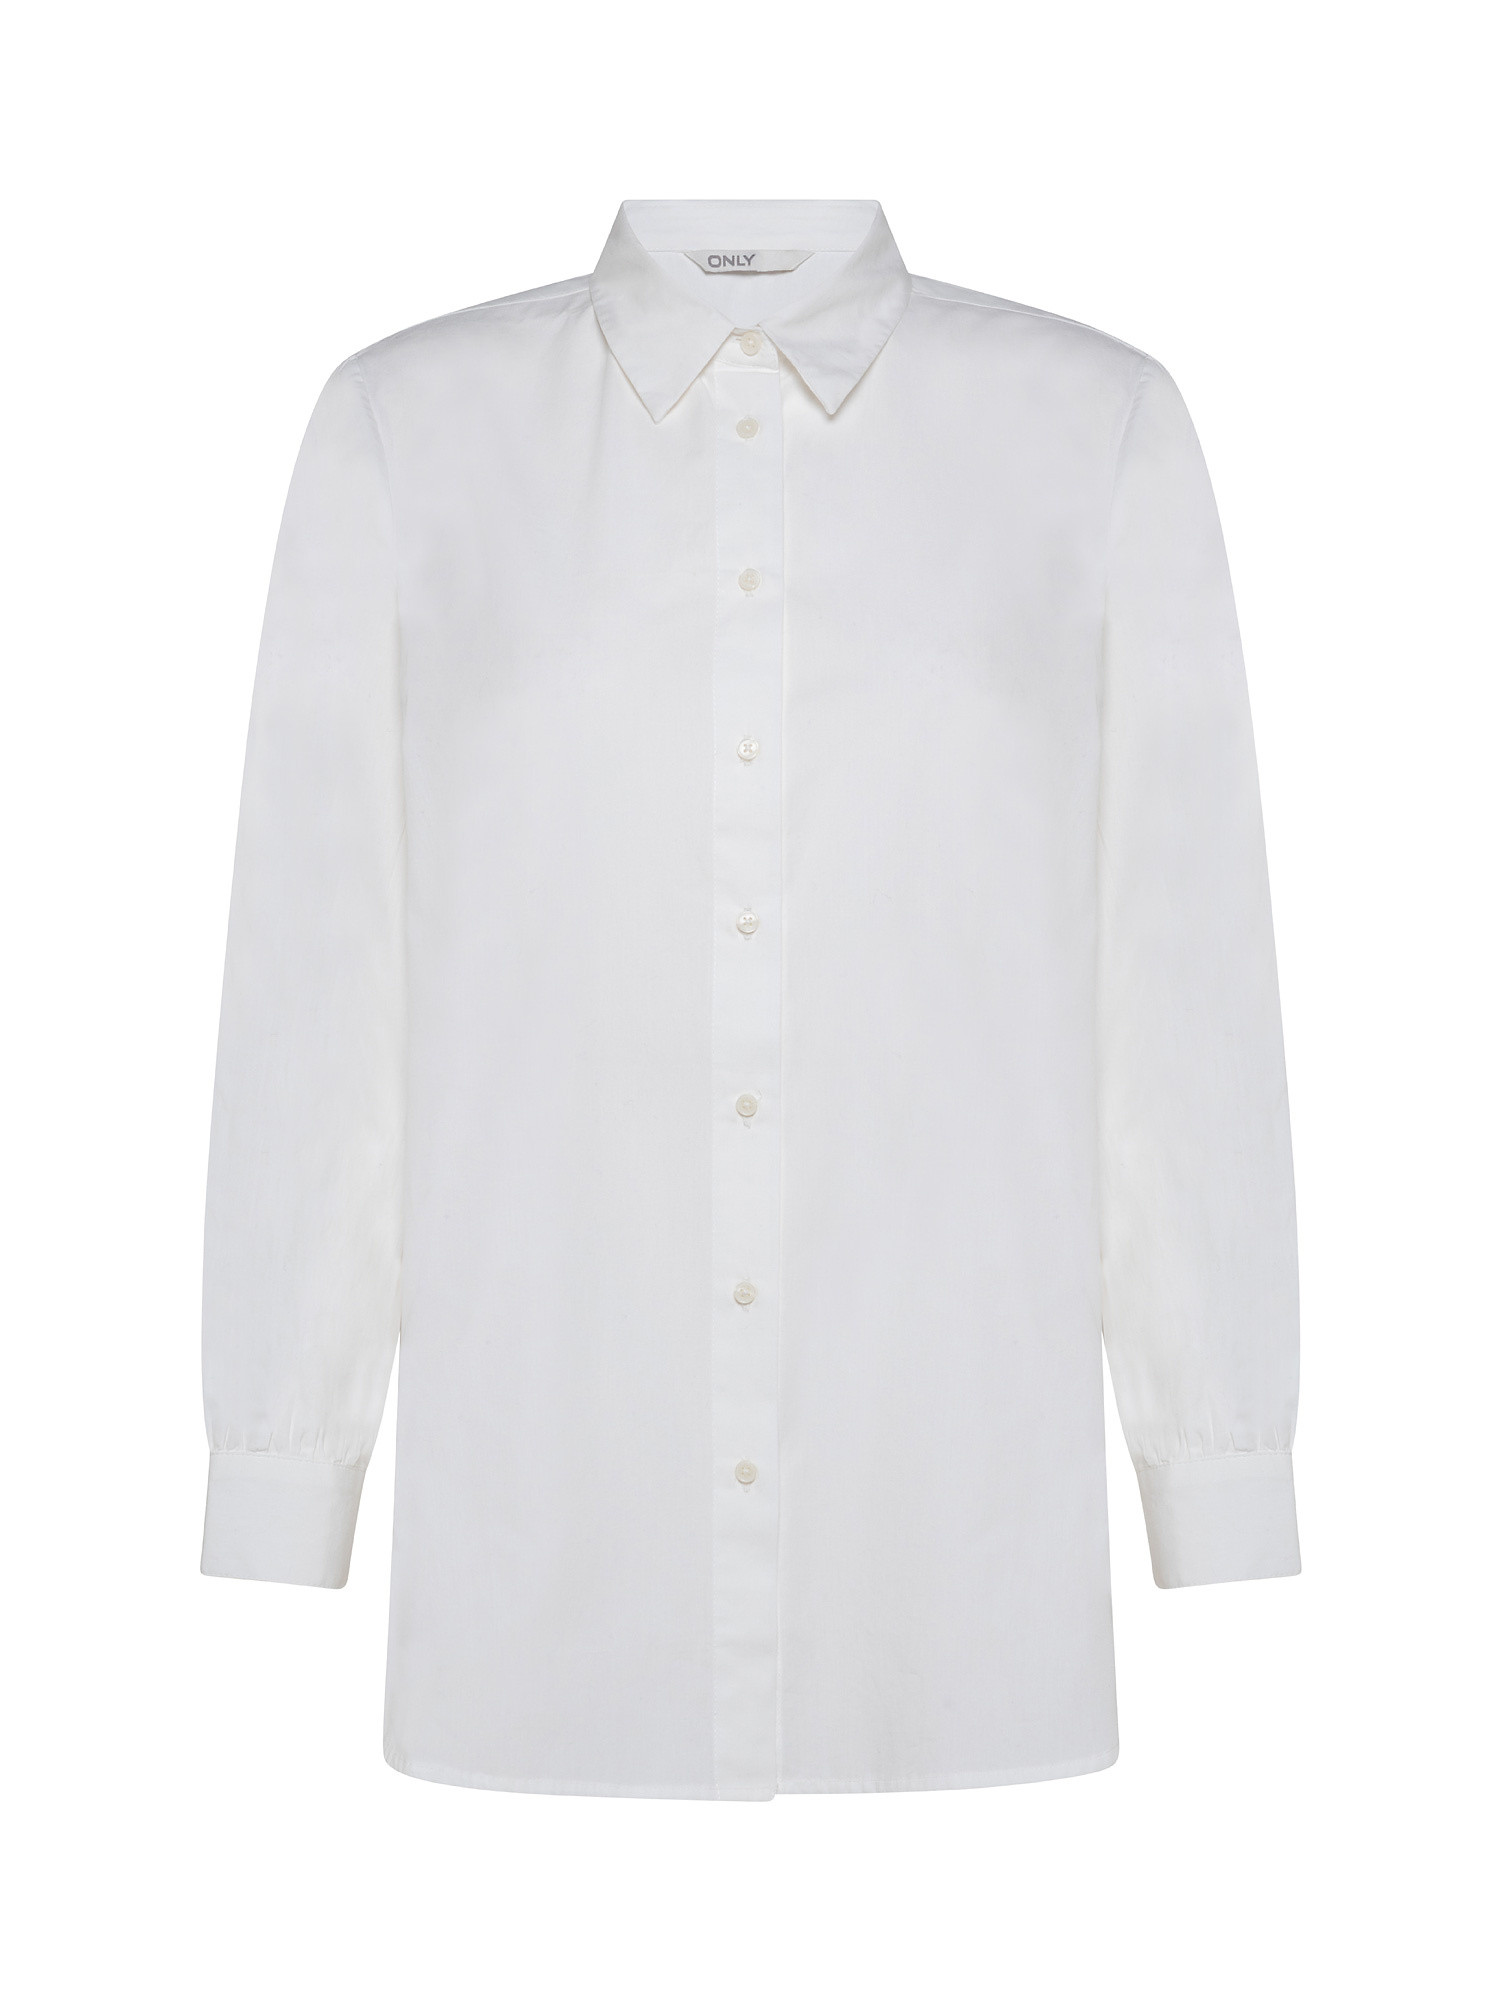 Camicia classica, Bianco, large image number 0